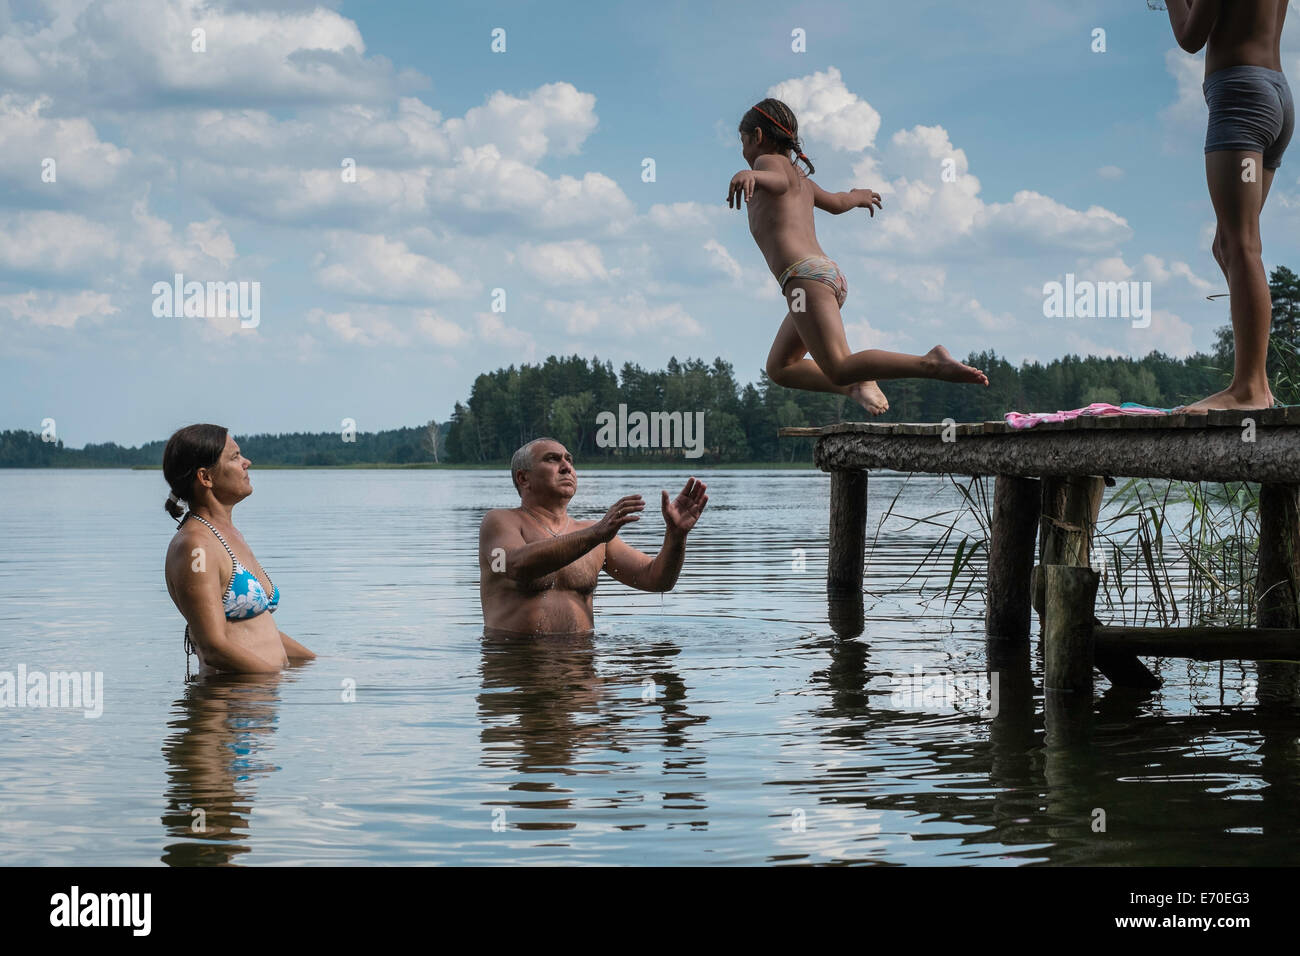 Family enjoying a swim, Zelwa Lake, Giby, Poland Stock Photo